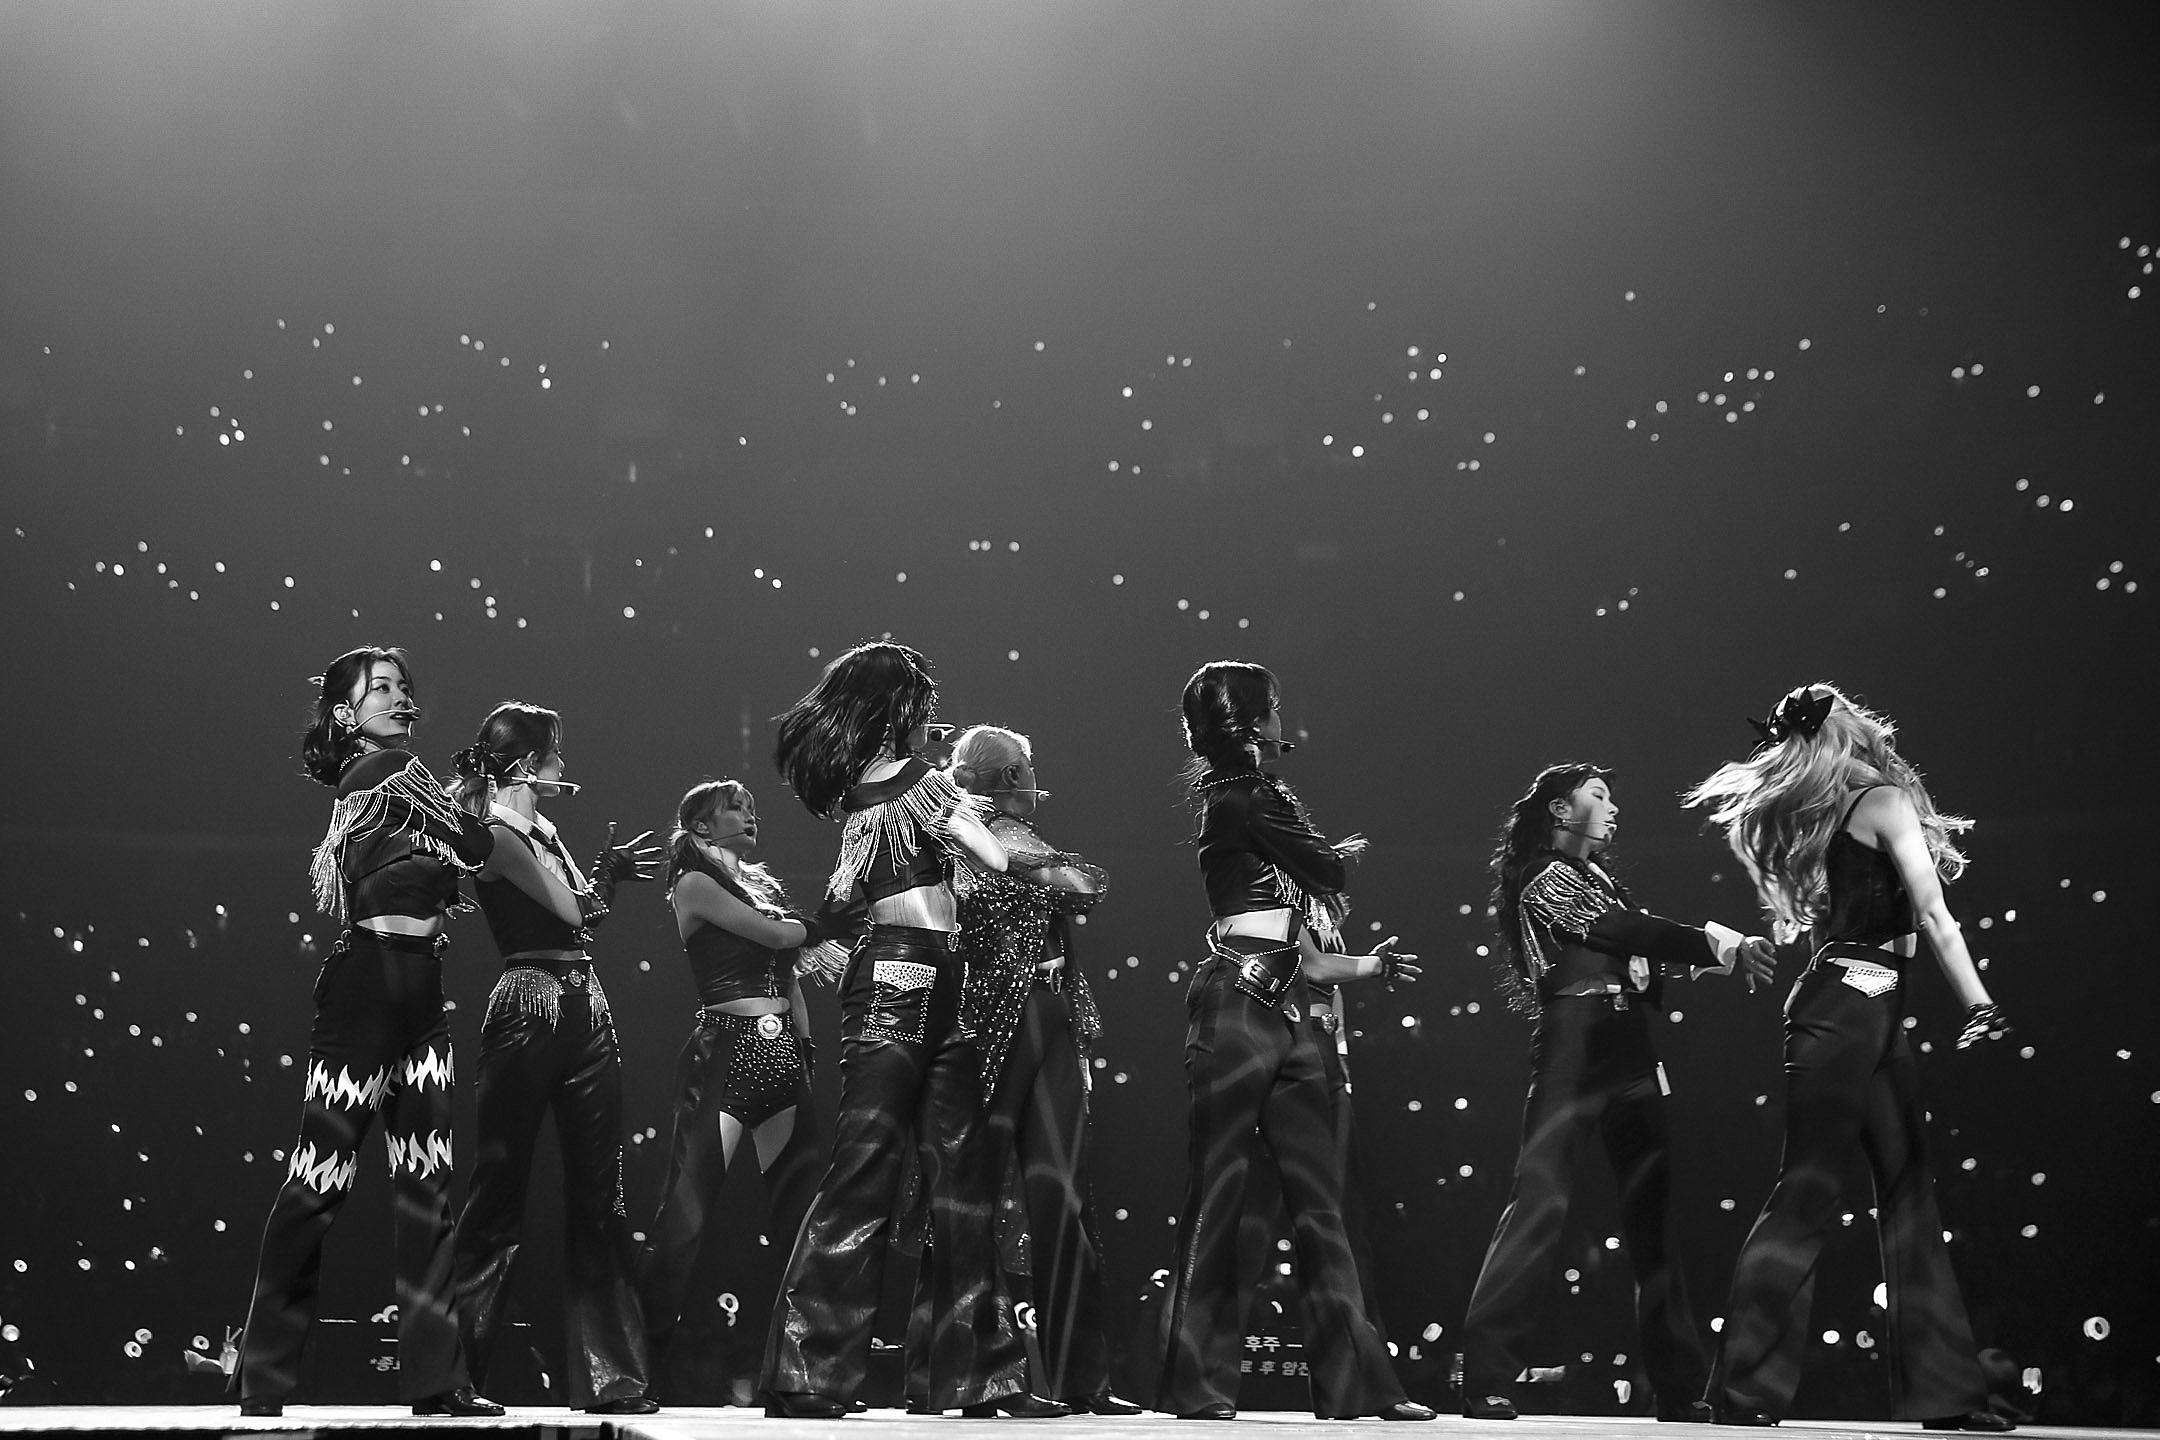 K-pop sensation TWICE was a big fluffy flop at 1st N.J. concert: review 